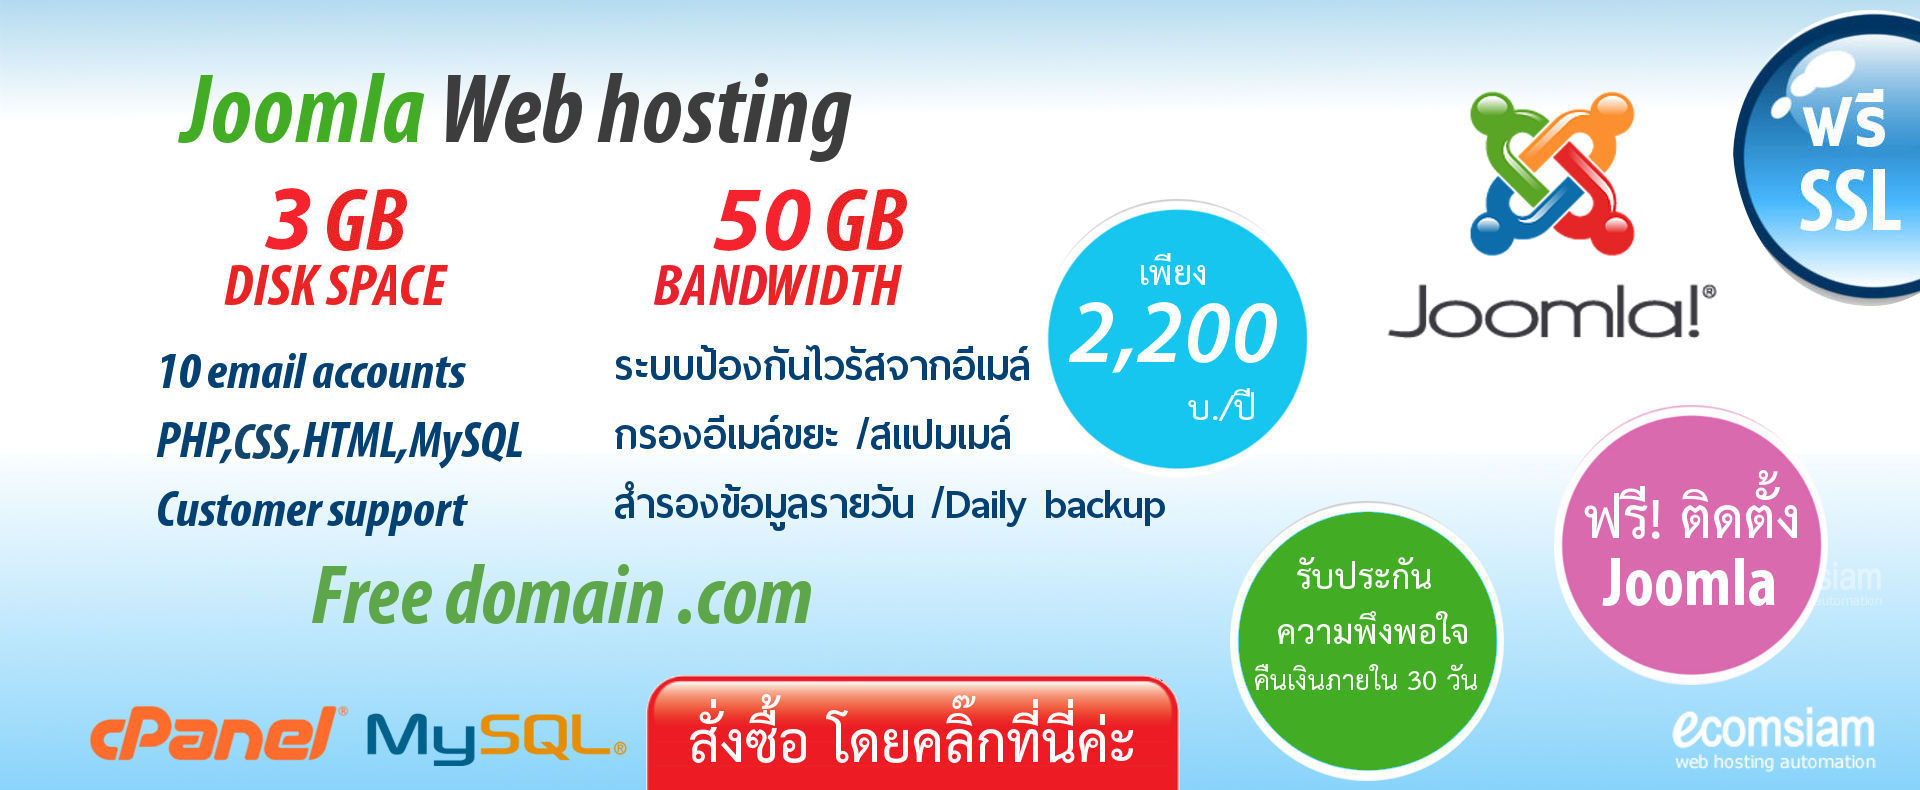 joomla web hosting thailand ฟรีโดเมน ฟรี SSL เว็บโฮสติ้งไทย ราคาเบาๆ เริ่มต้นเพียง 2200 บาทต่อปี บริการลูกค้า ดูแลดีโดย thailandwebhost.com